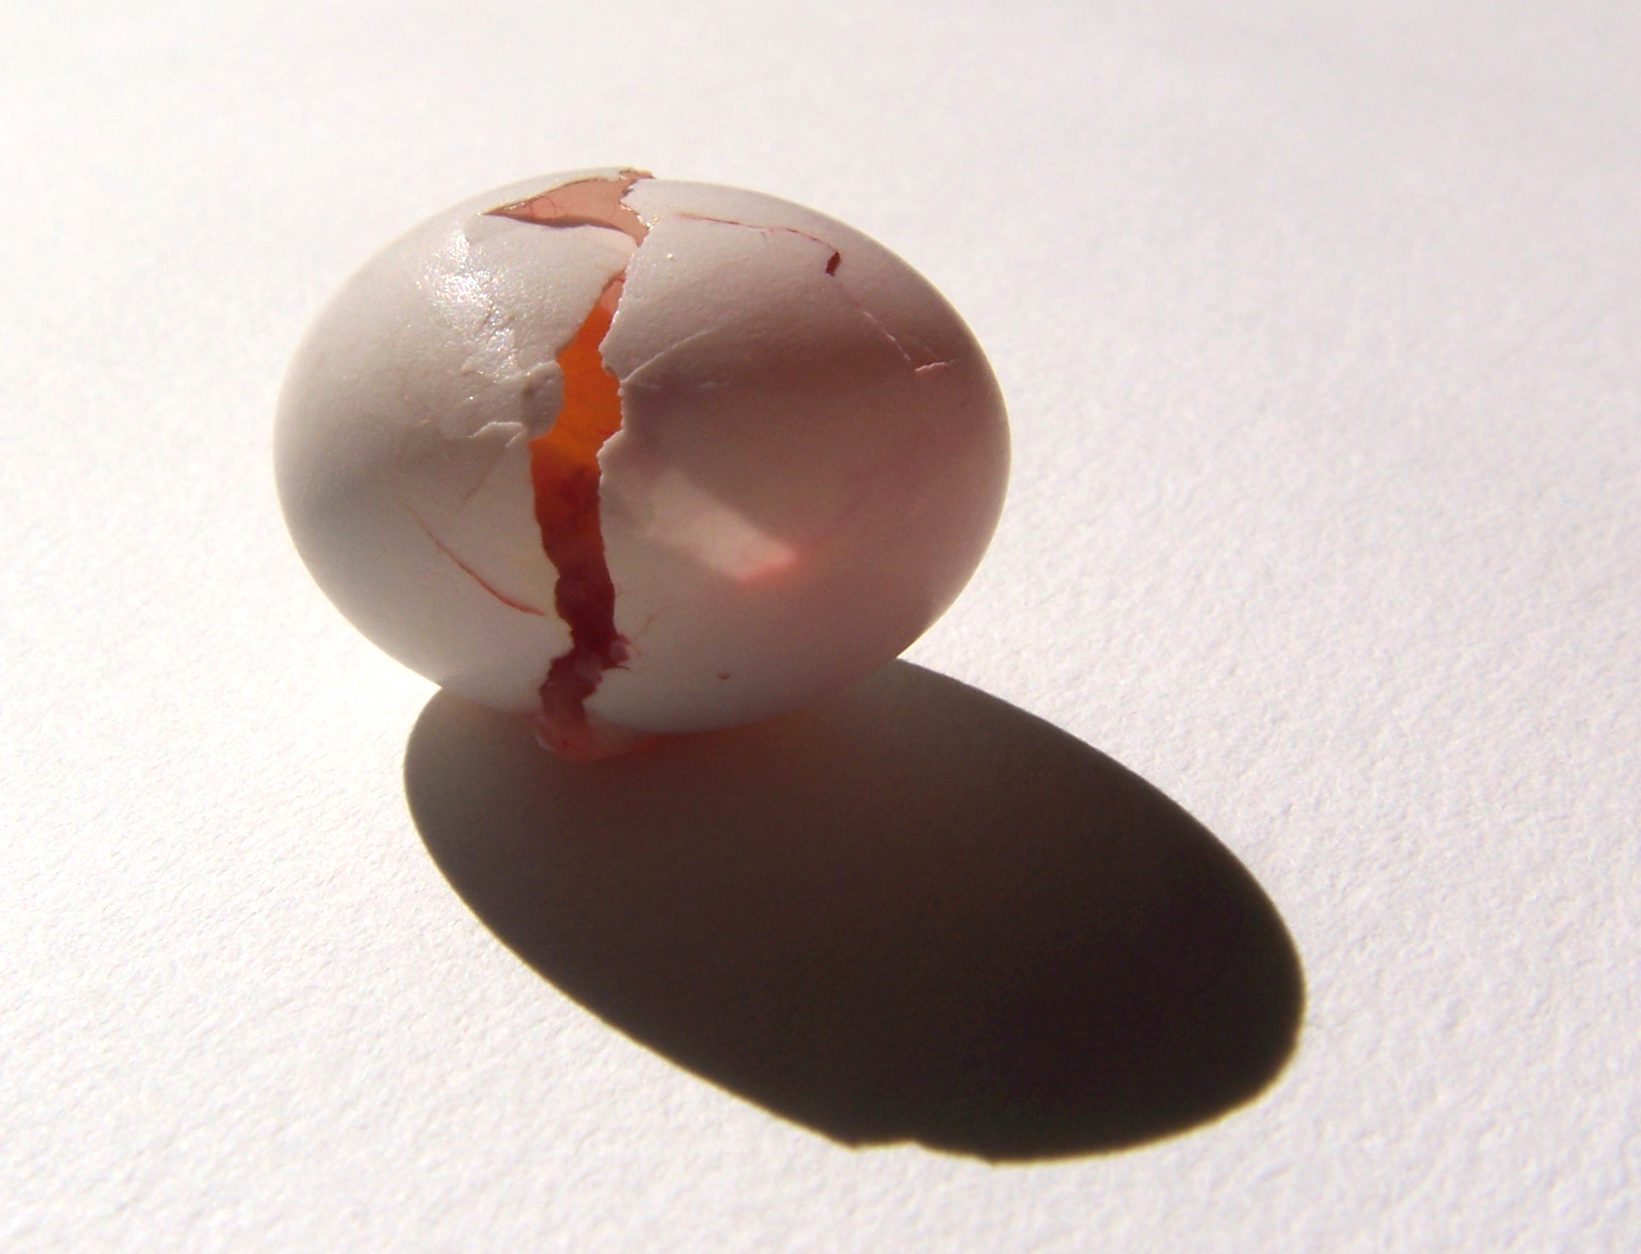 Яйцо трещина. Треснутое яйцо. Яйцо треснуло. Яйцо с трещинкой. Разбитое яйцо трещина.